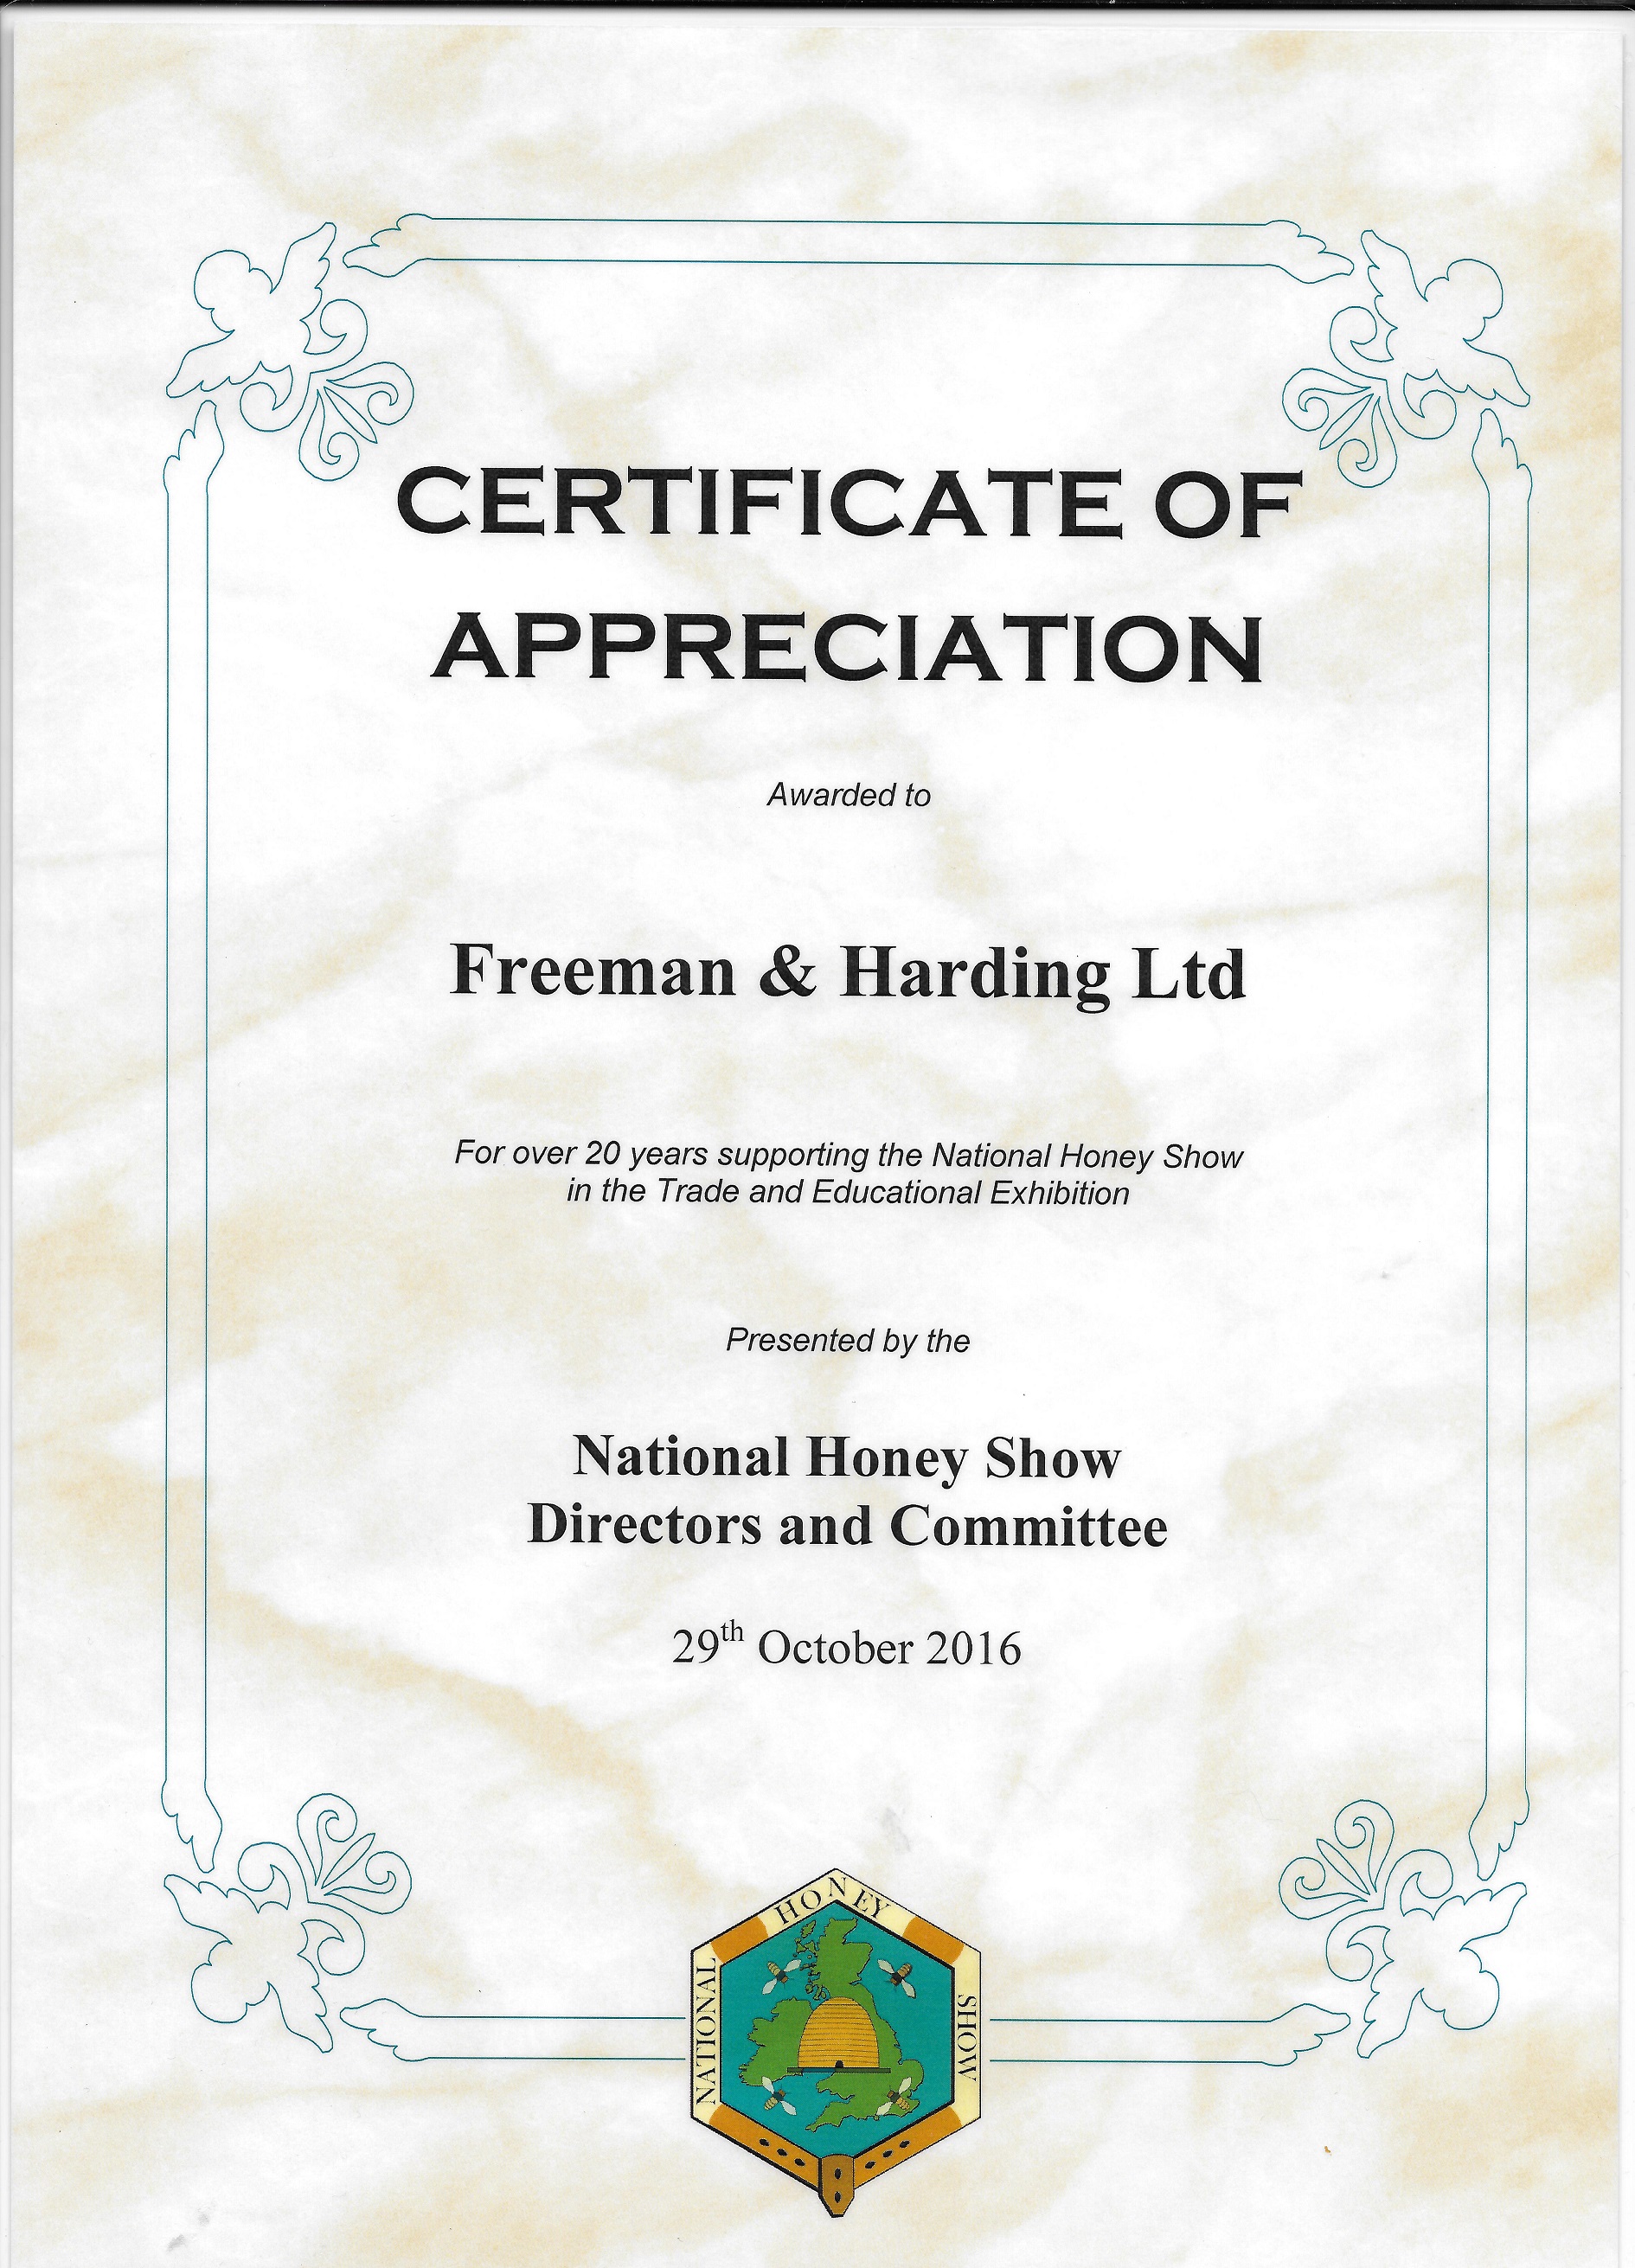 National Honey Show Certificate